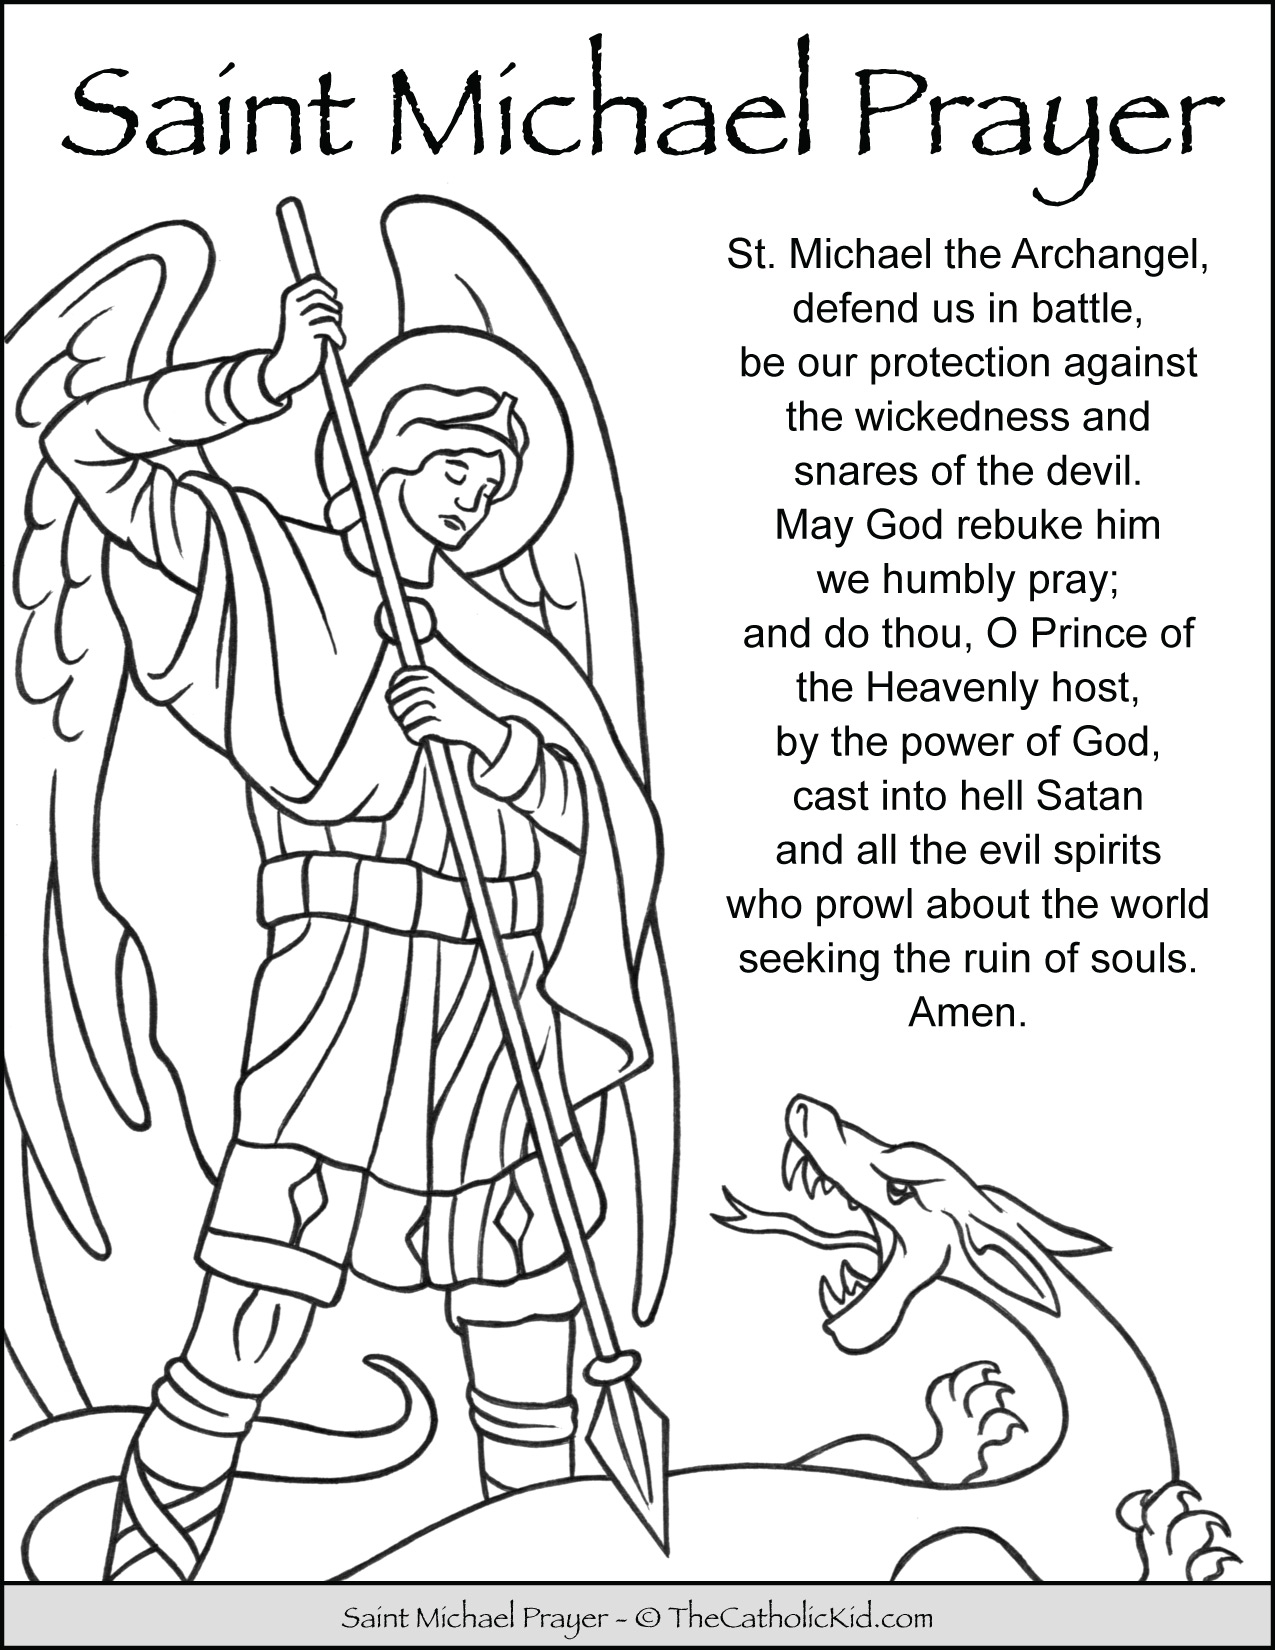 Saint Michael Prayer Coloring Page - TheCatholicKid.com